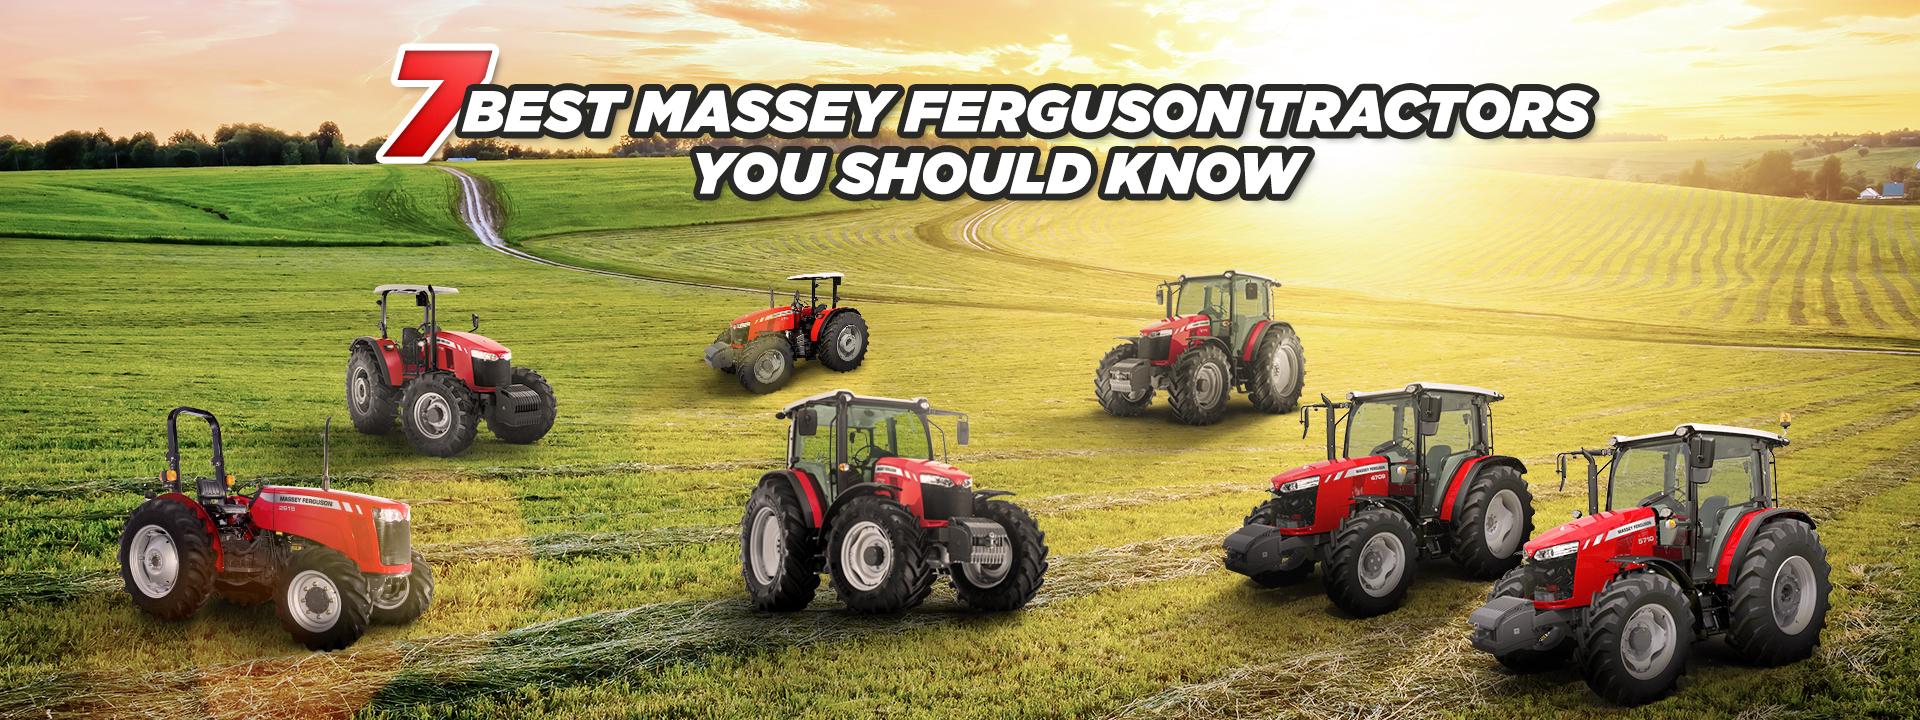 7 best massey ferguson tractors you should know